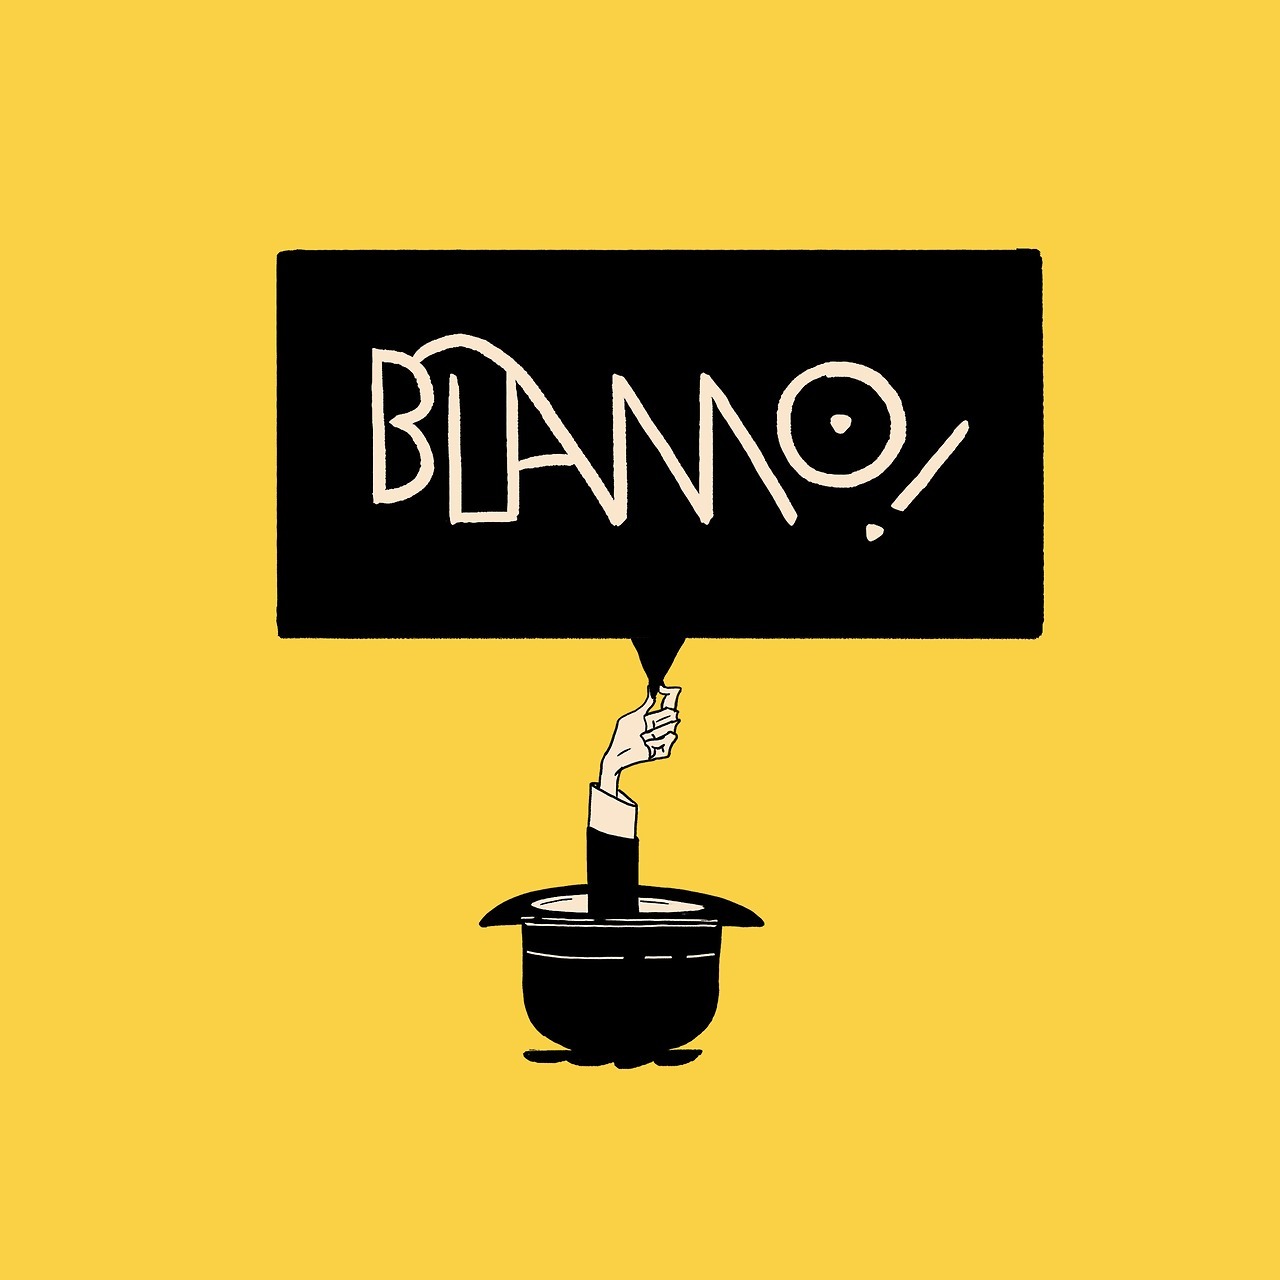 Blamo! Launches Third Season